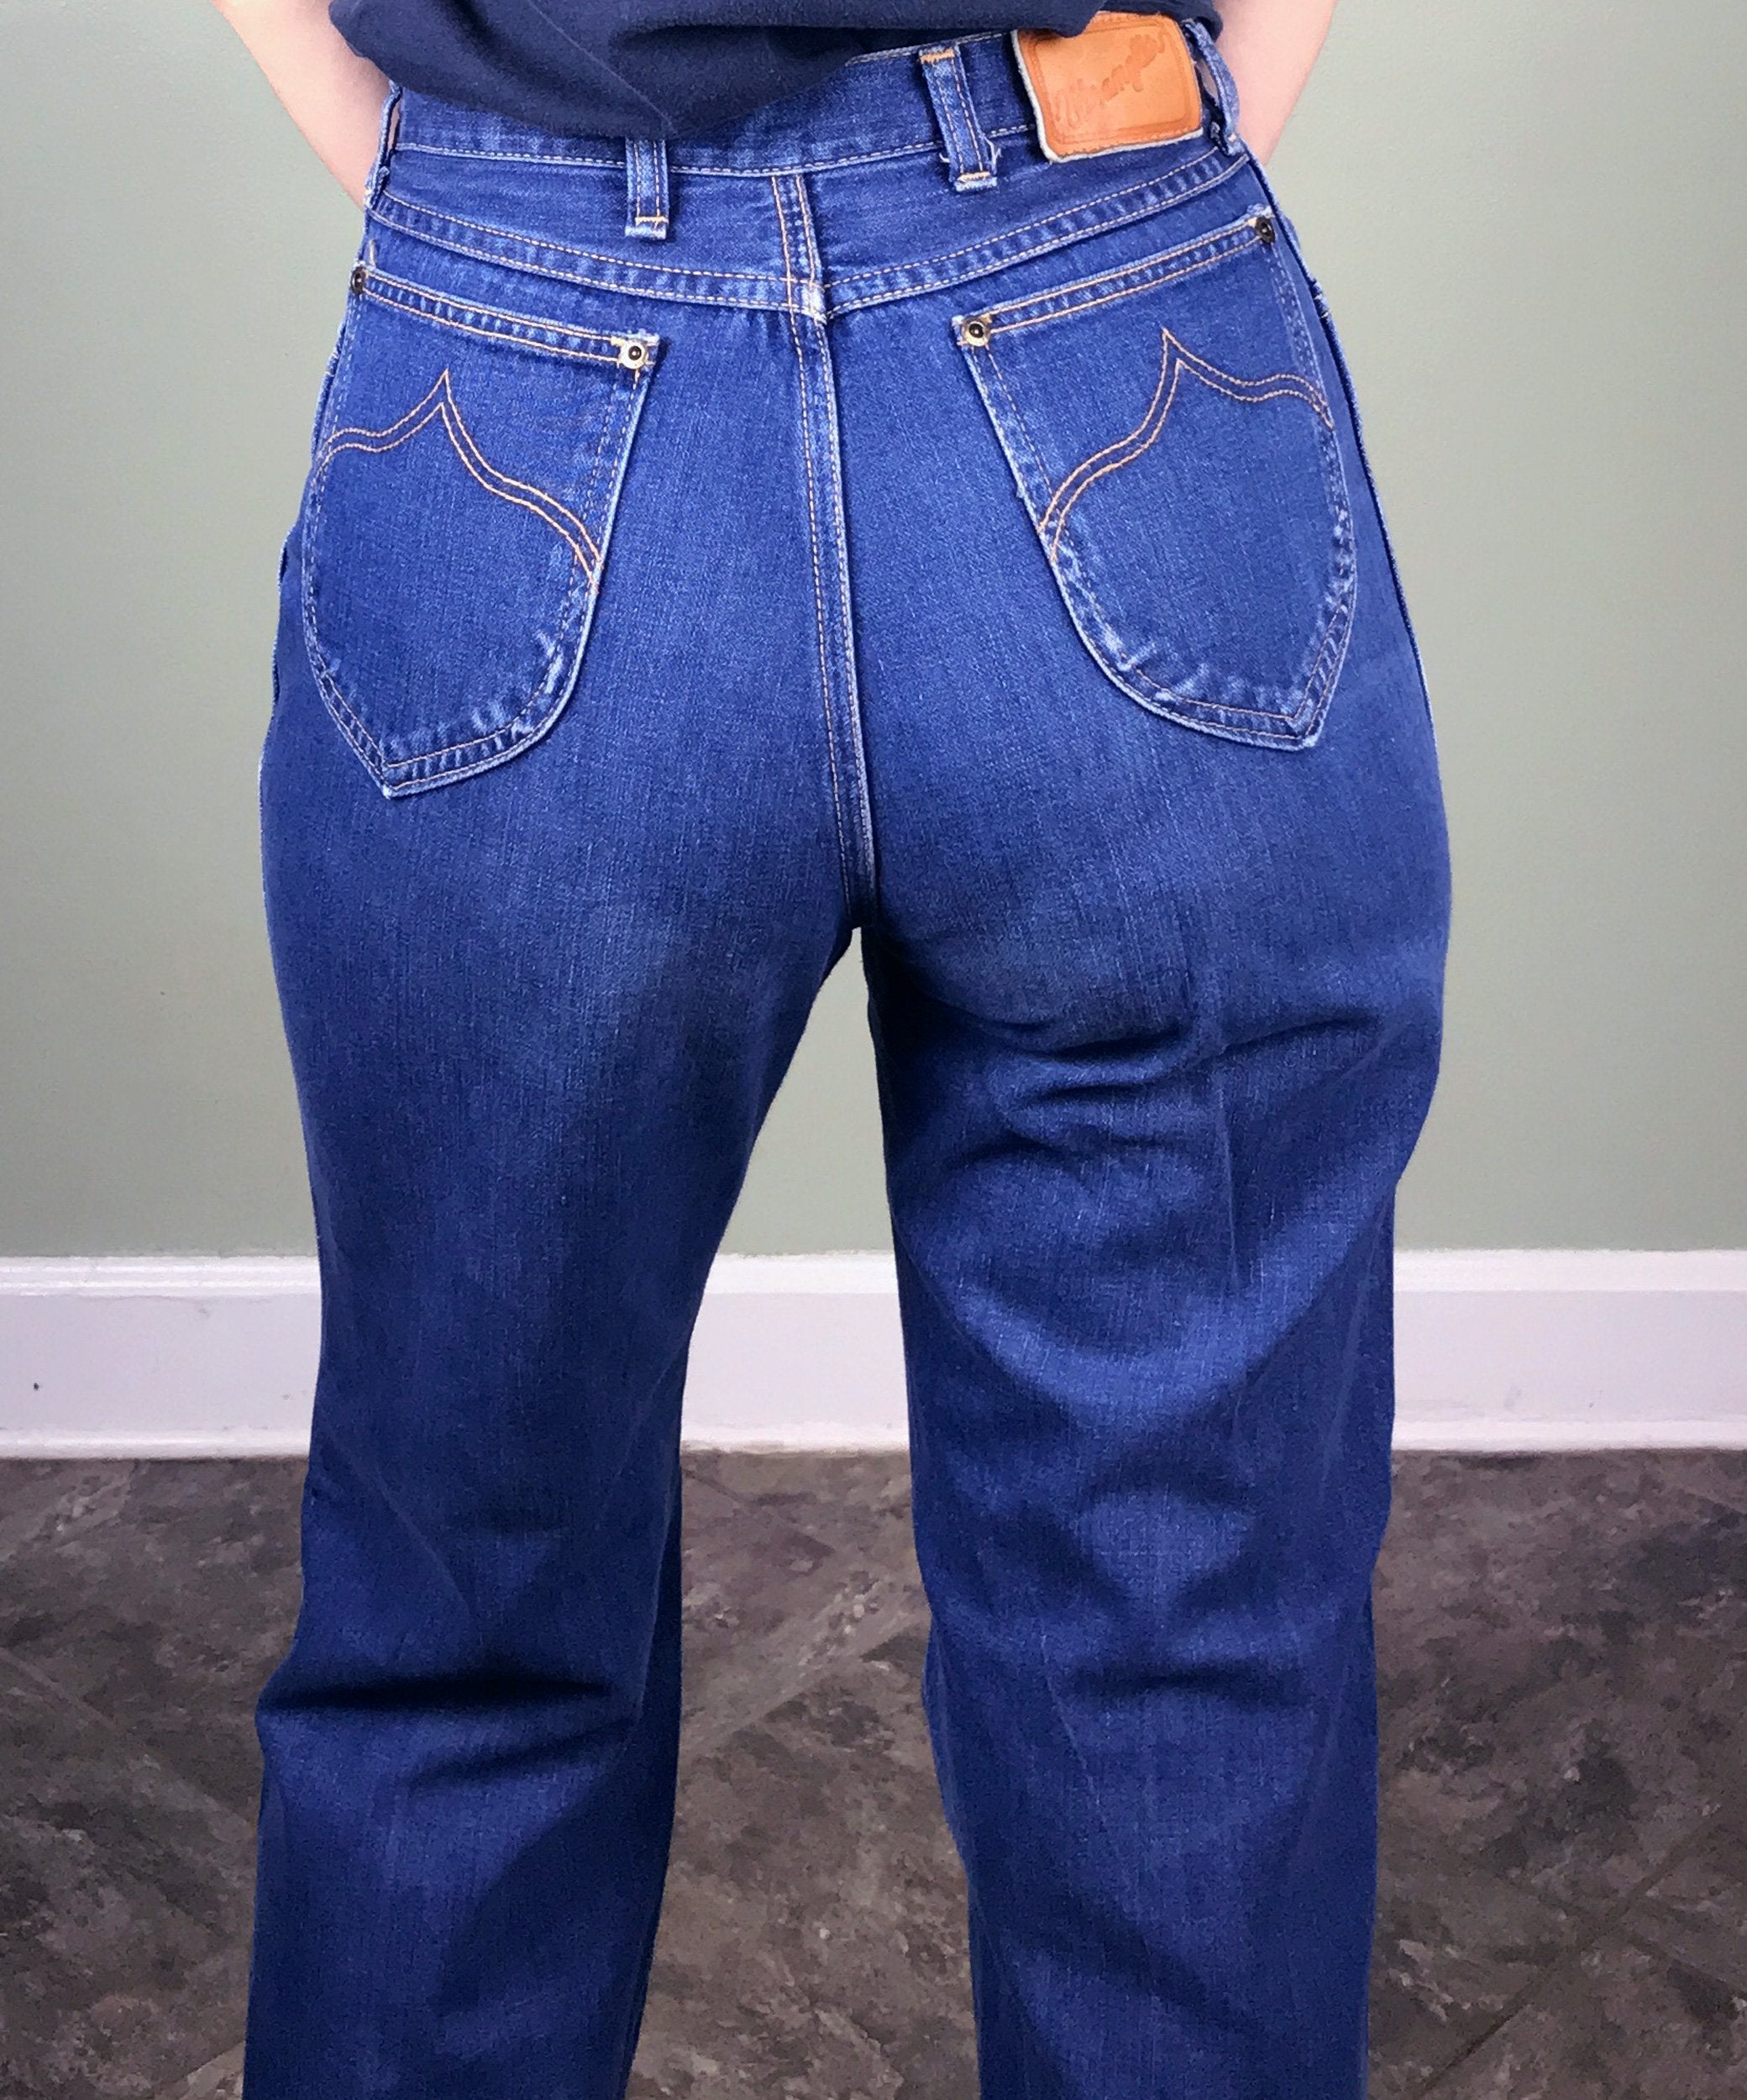 wrangler jeans 30x34